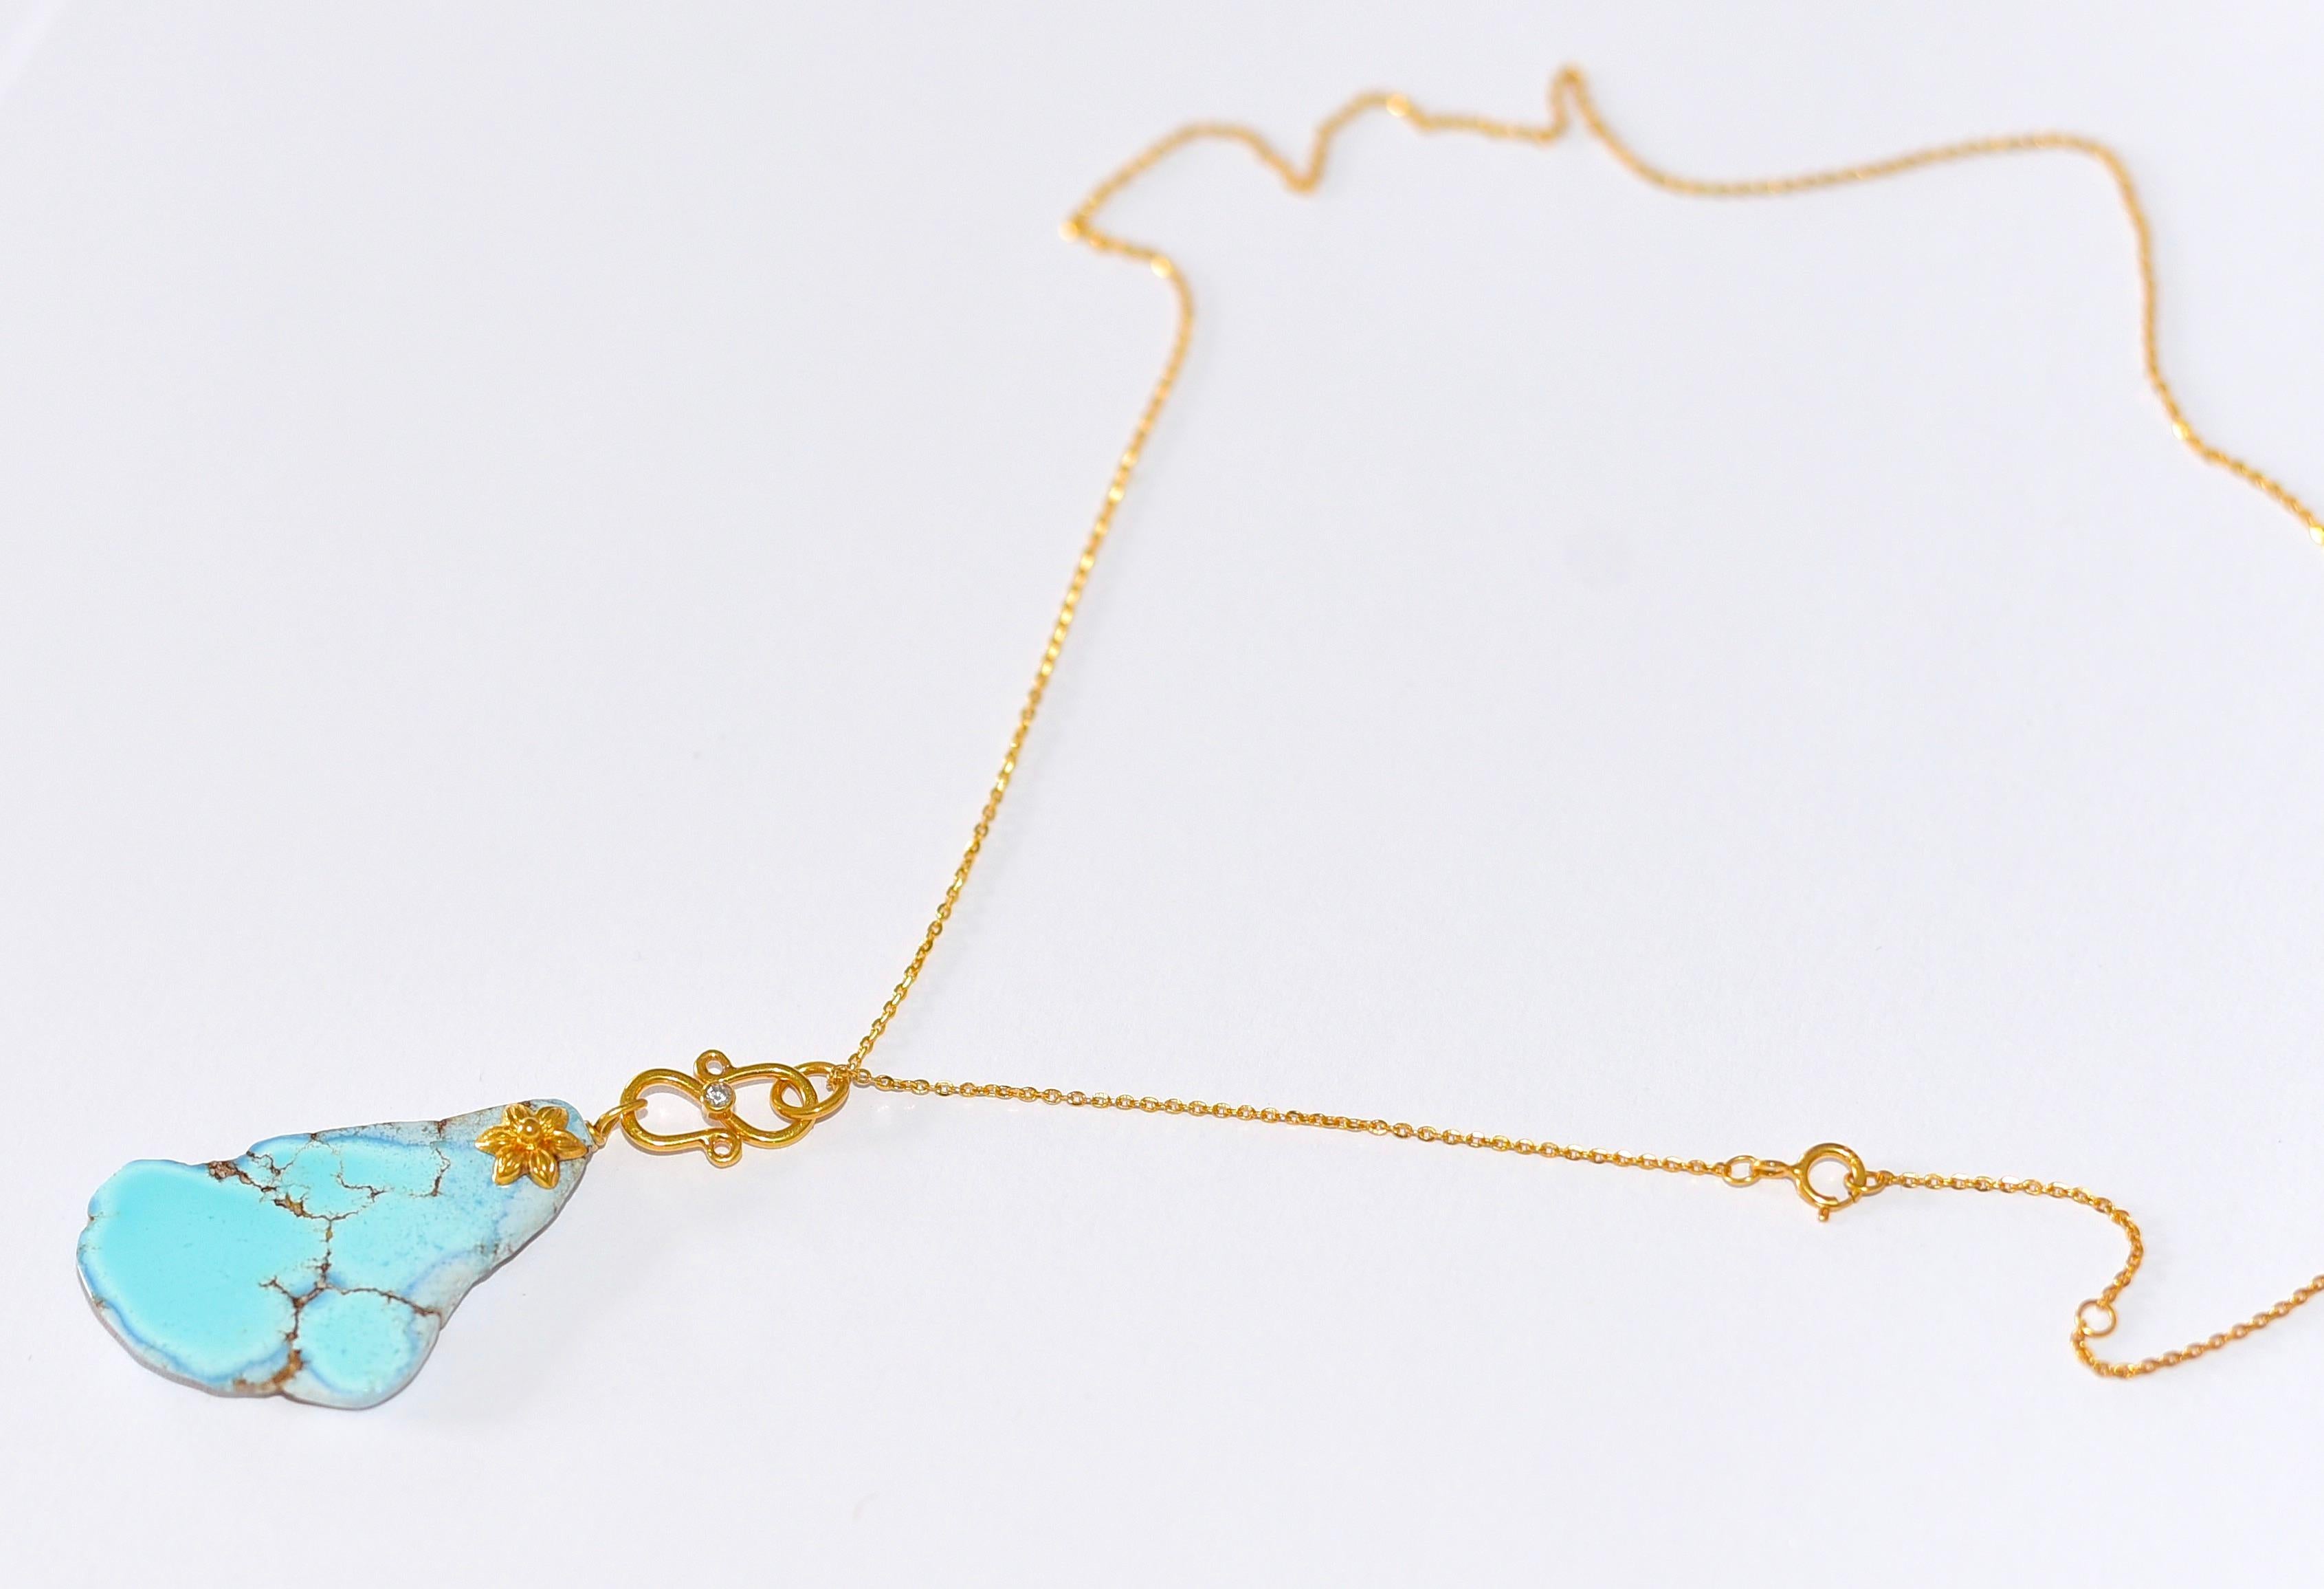 Artisan Kazakhstan Lavender Turquoise Necklace in 18K Solid Yellow Gold, Diamond